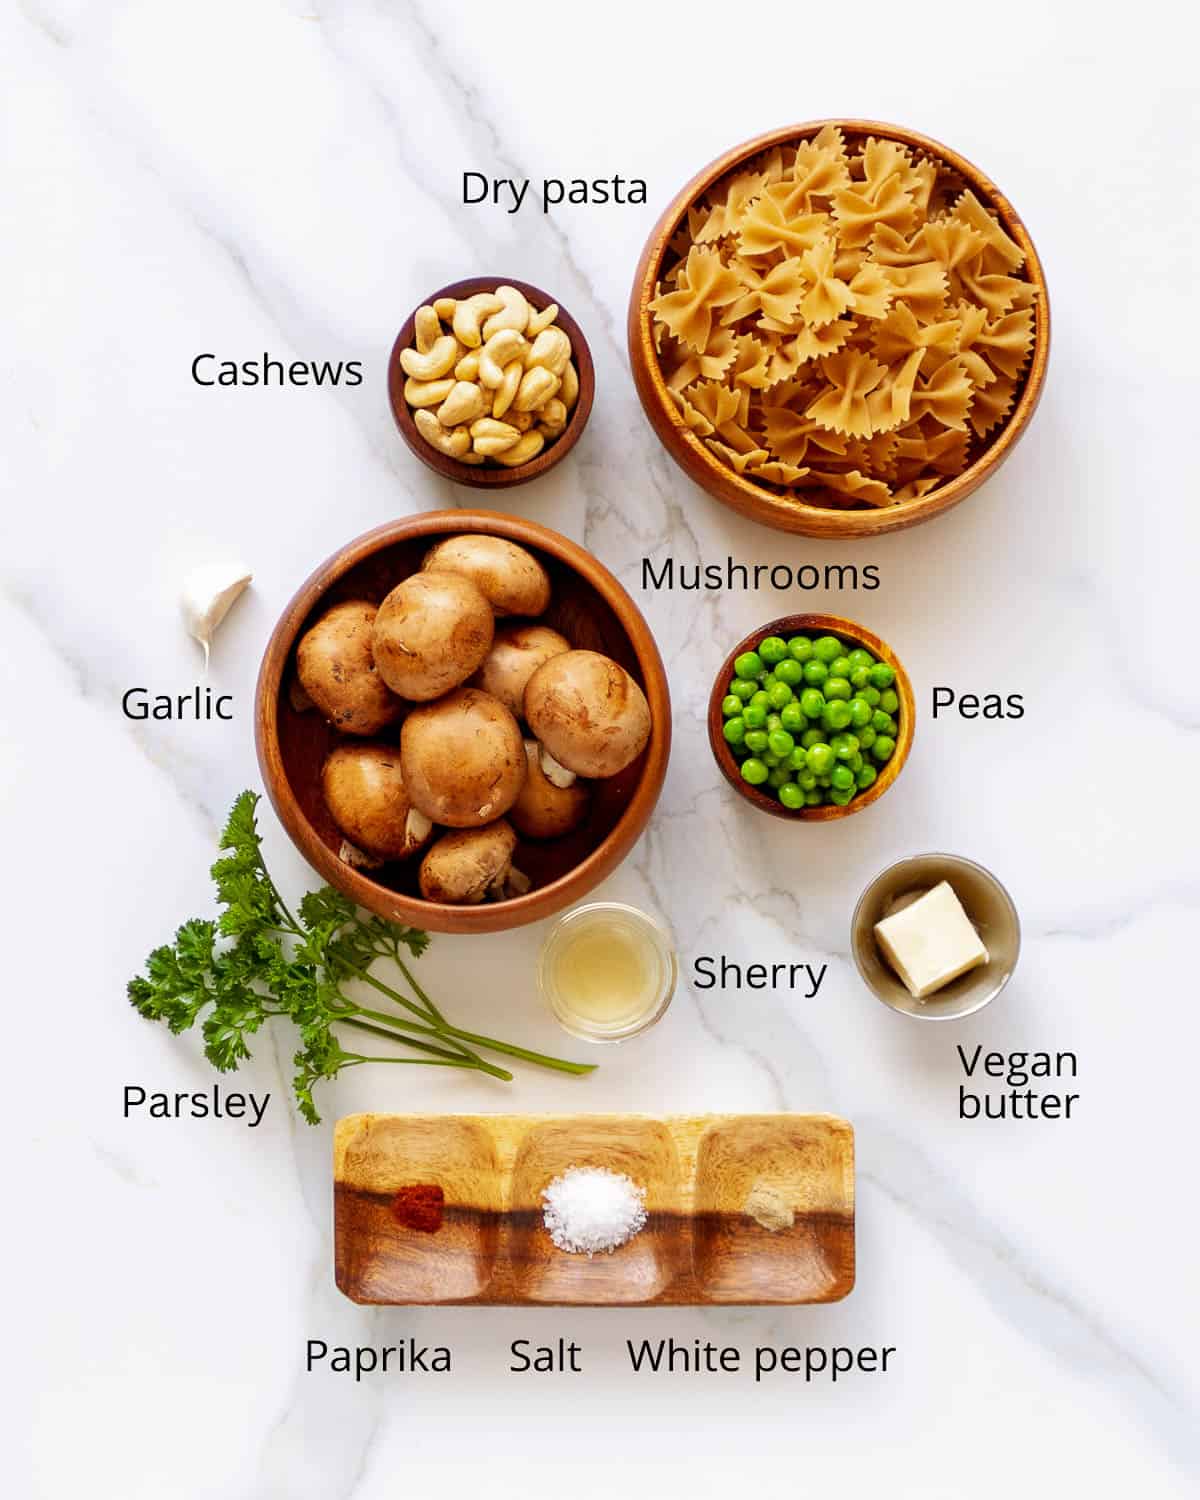 Bowtie pasta, mushrooms, cashews, peas, garlic and parsley.